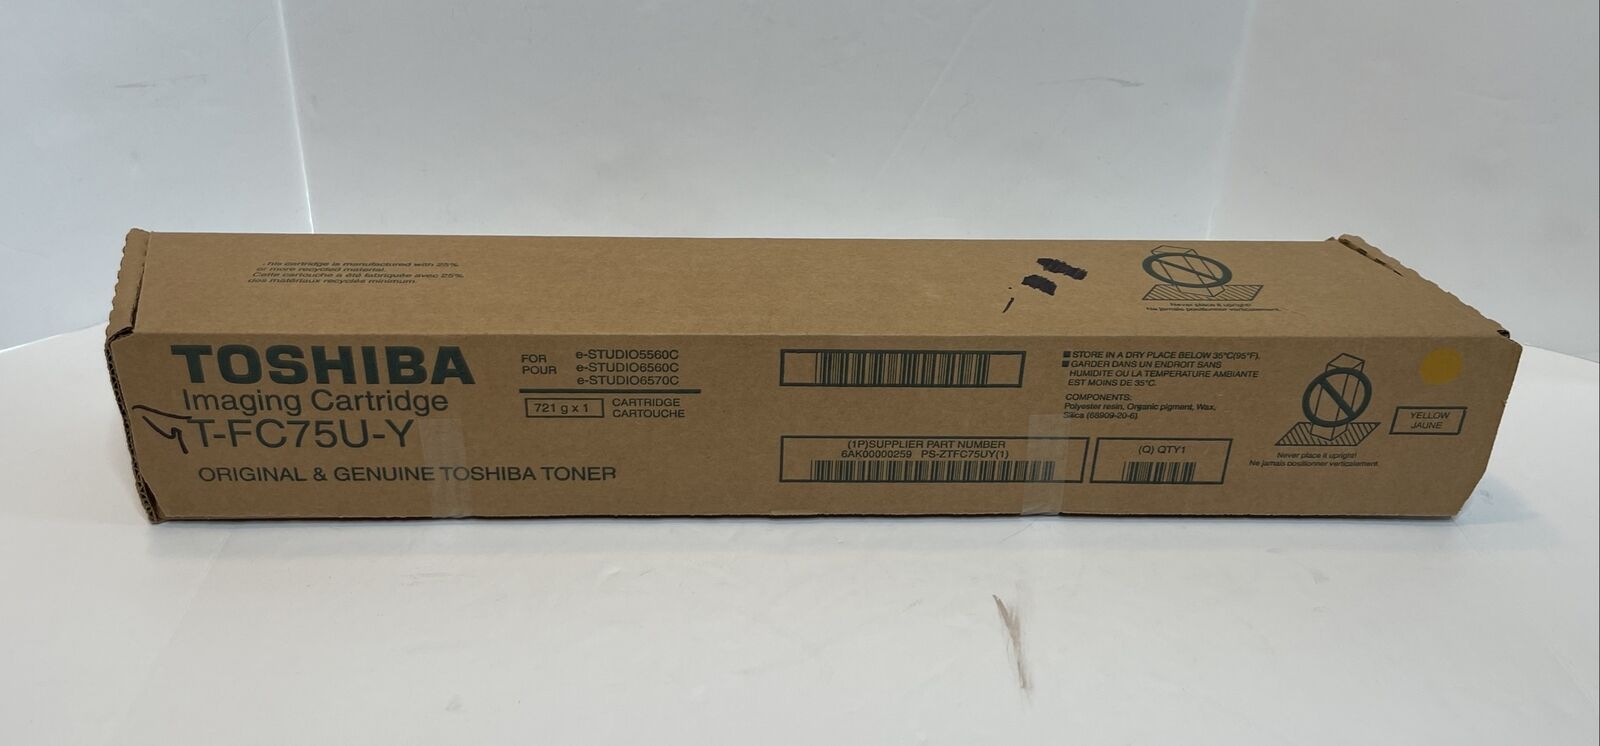 Brand New Toshiba T-FC75U-Y Yellow Toner Ctg for Toshiba e-STUDIO 5560c Series